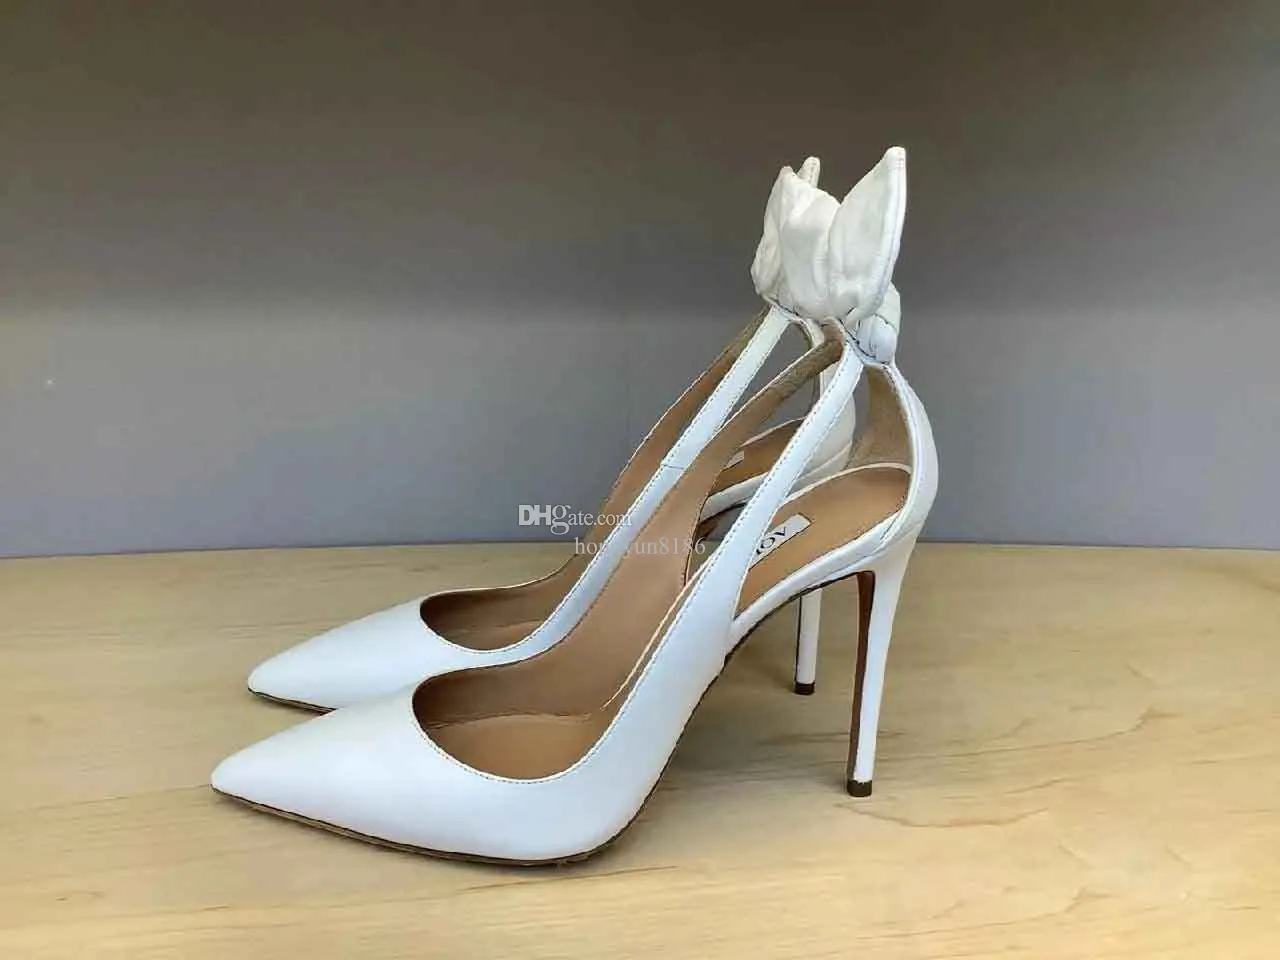 Retro Women designer Sandals Shoes Strappy Design Aquazzures Bow Tie Pumpas in Blush Suede Sandal Bridal Wedding Party Lady High Heels Mules WITH BOX 35-43